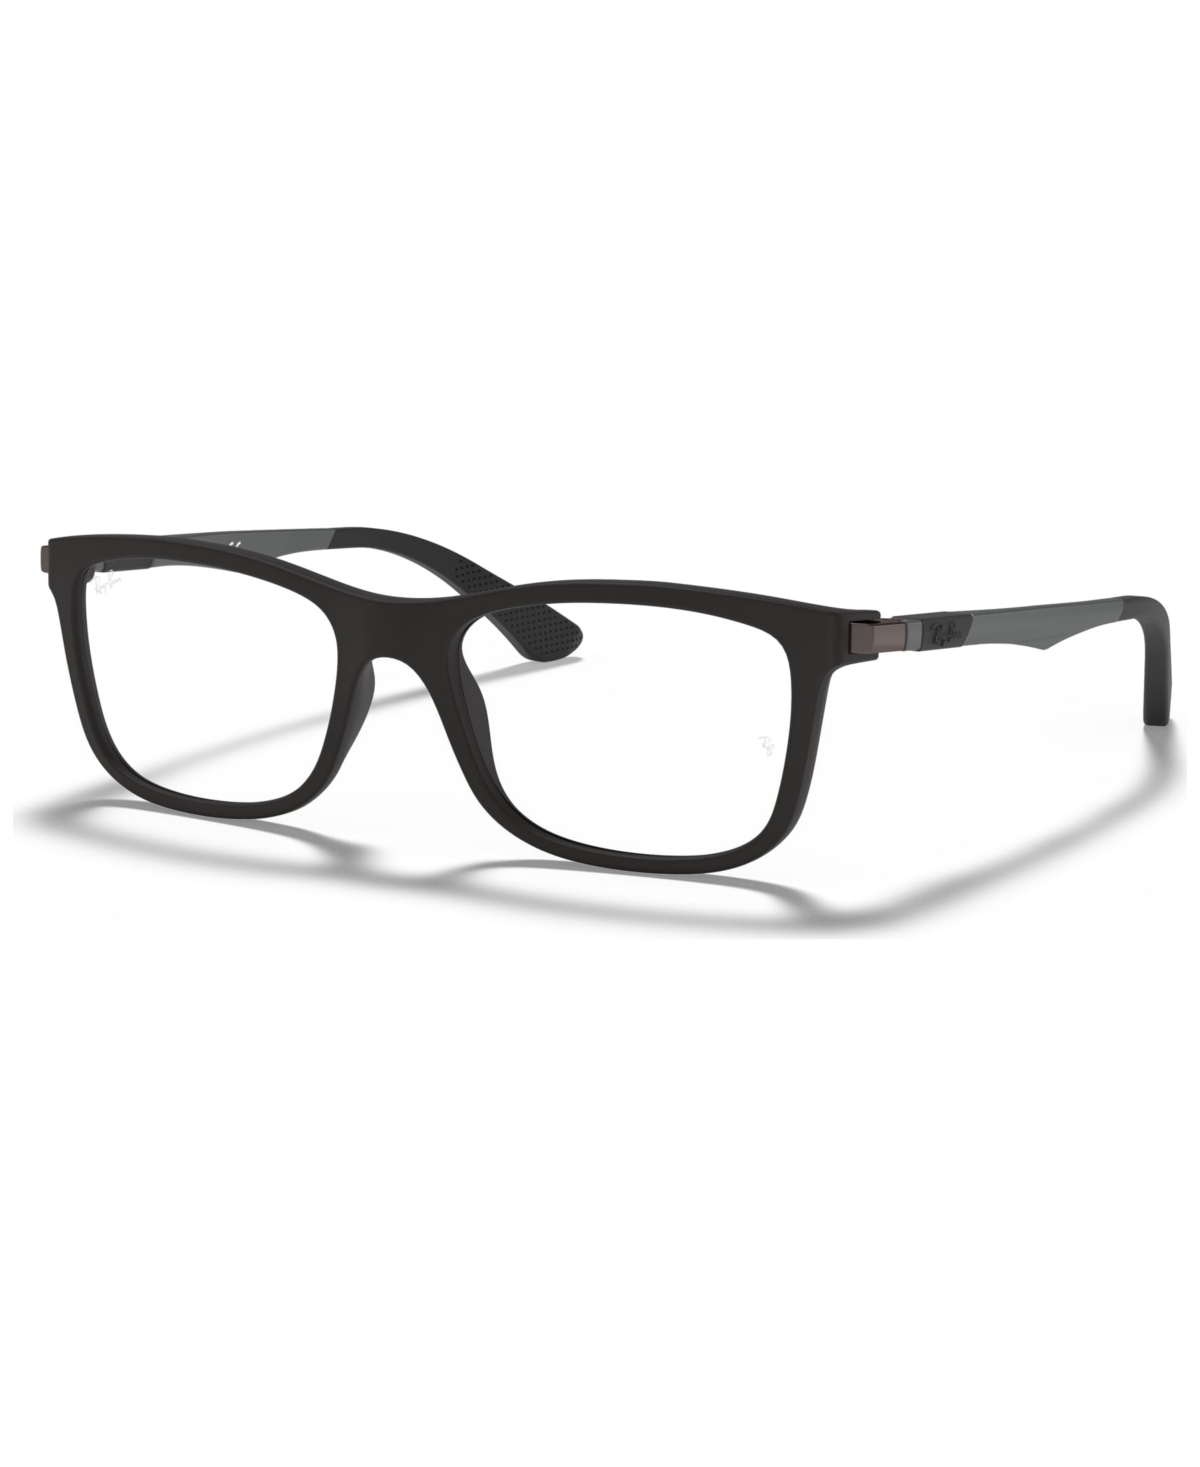 RY1549 Child Square Eyeglasses - Black